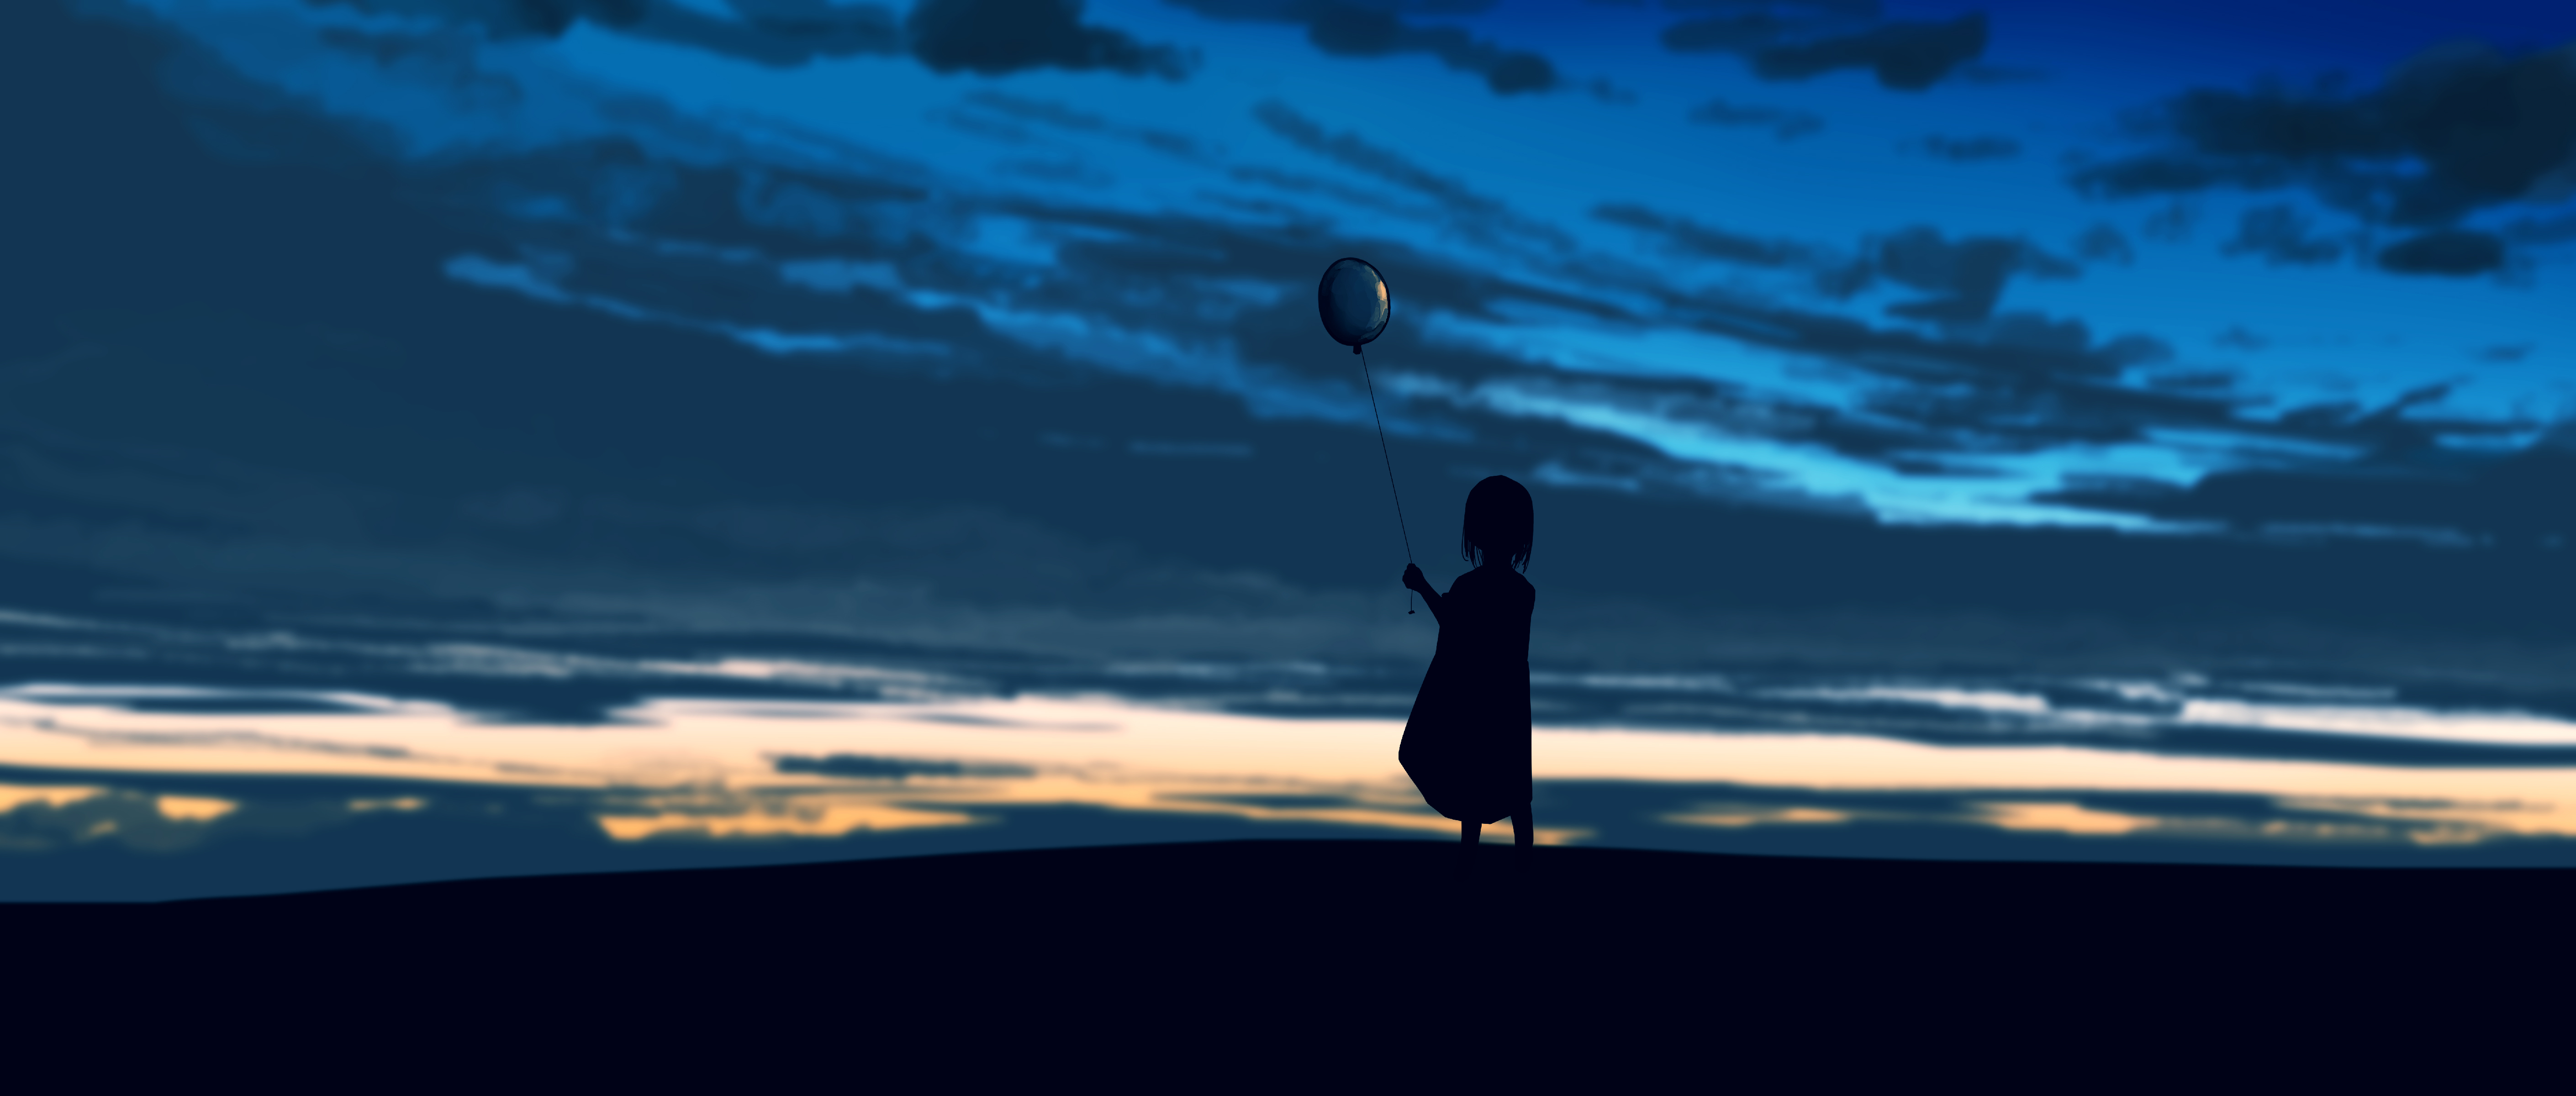 Anime Anime Sky Artwork Anime Girls Horizon Clouds Sky Sunset Silhouette Gracile Balloon 5640x2400